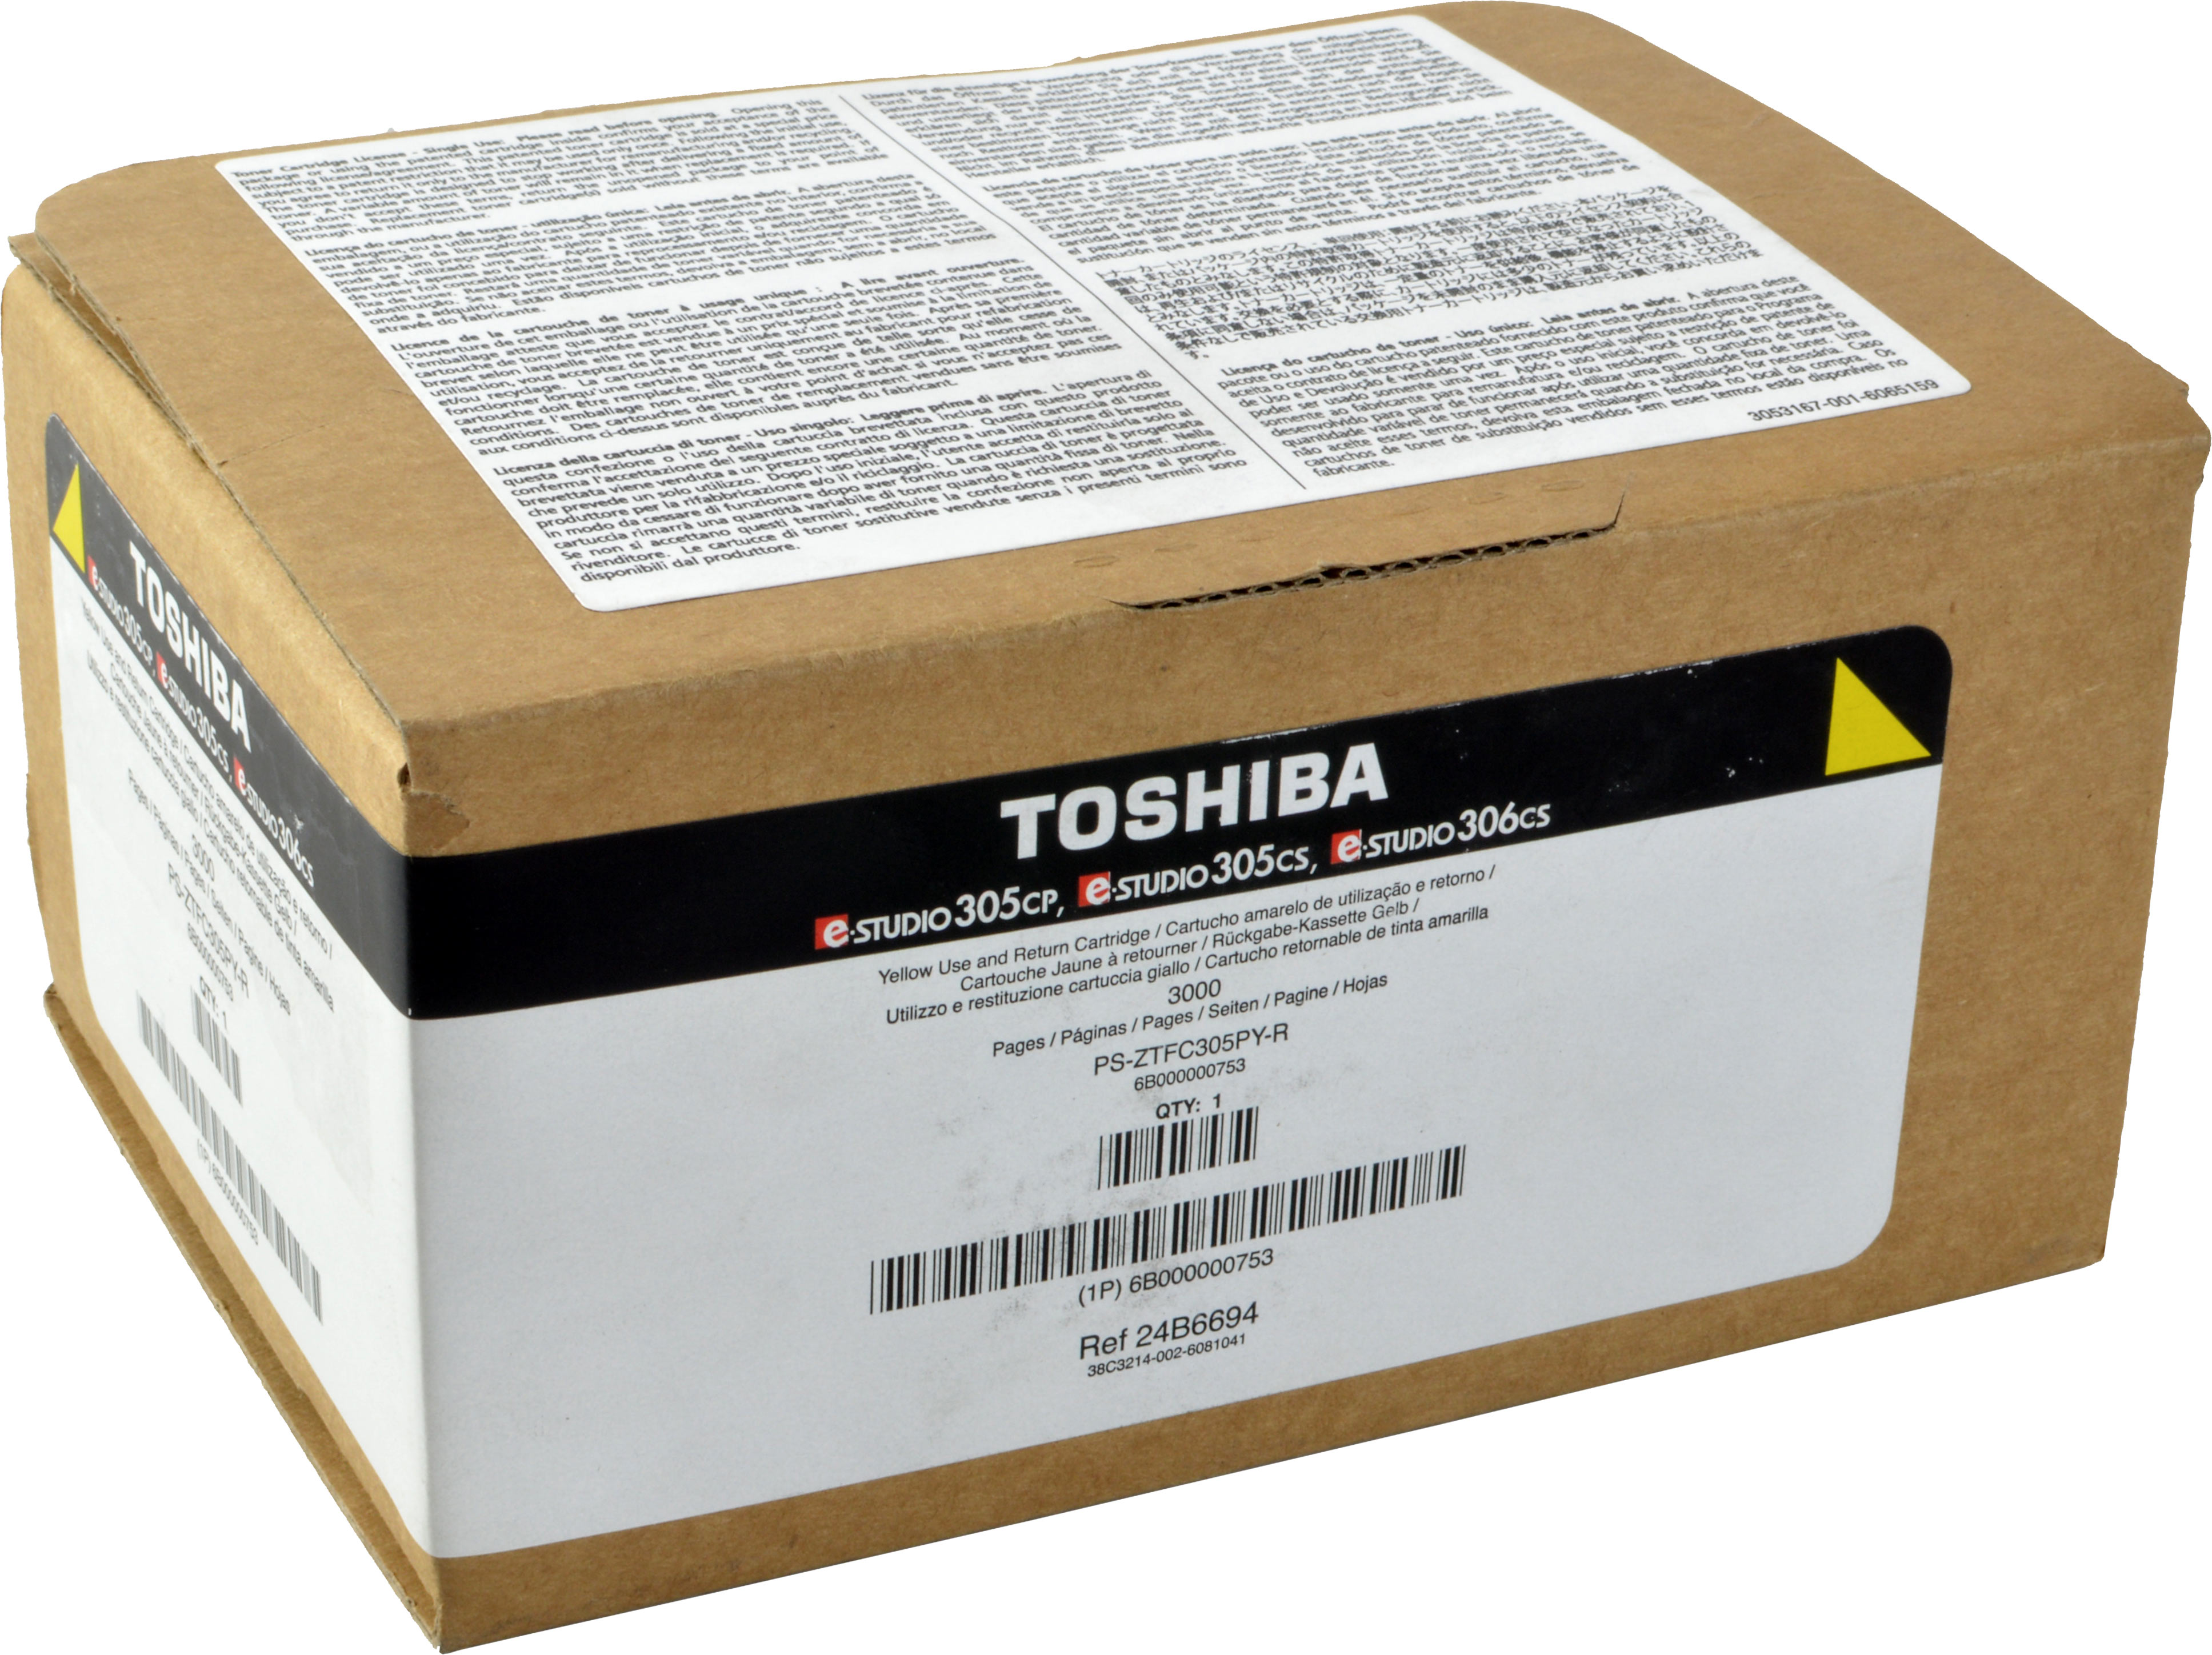 Toshiba Toner T-305PY-R  6B000000753  yellow